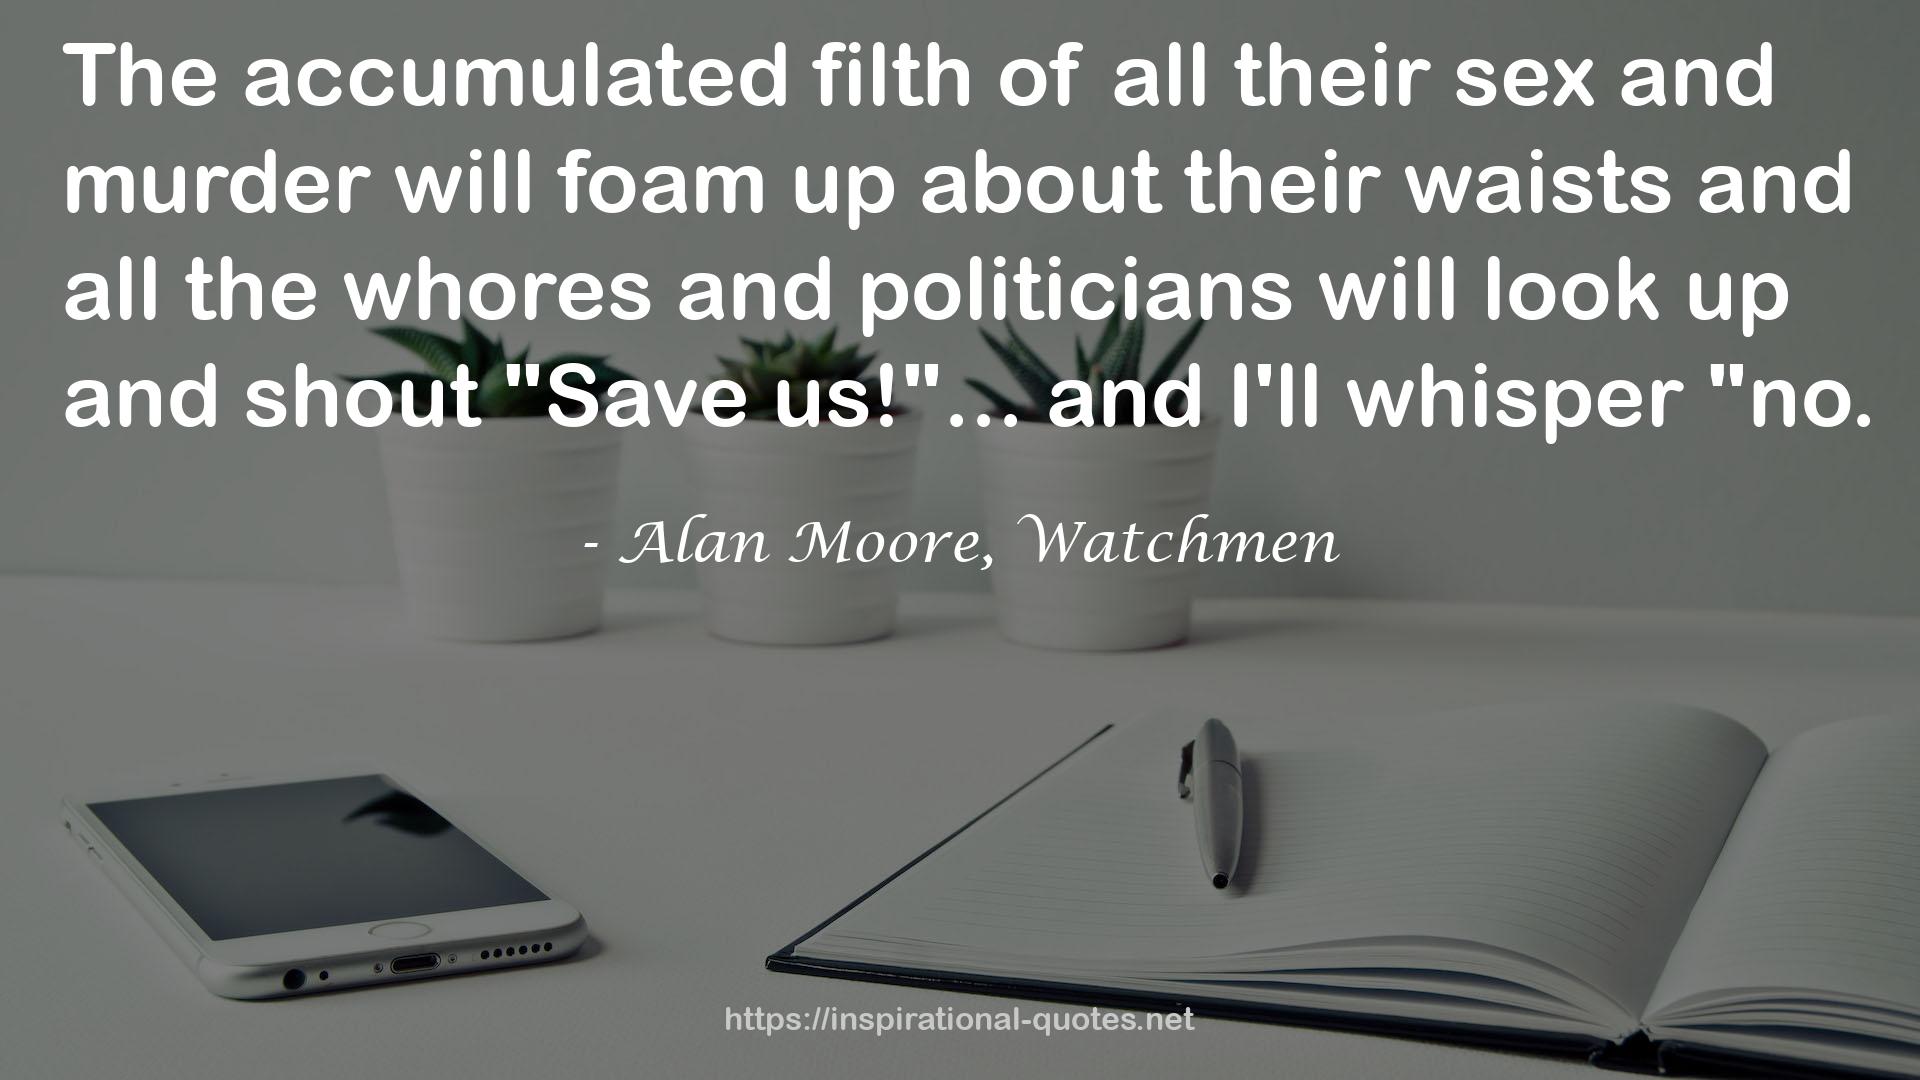 Alan Moore, Watchmen QUOTES